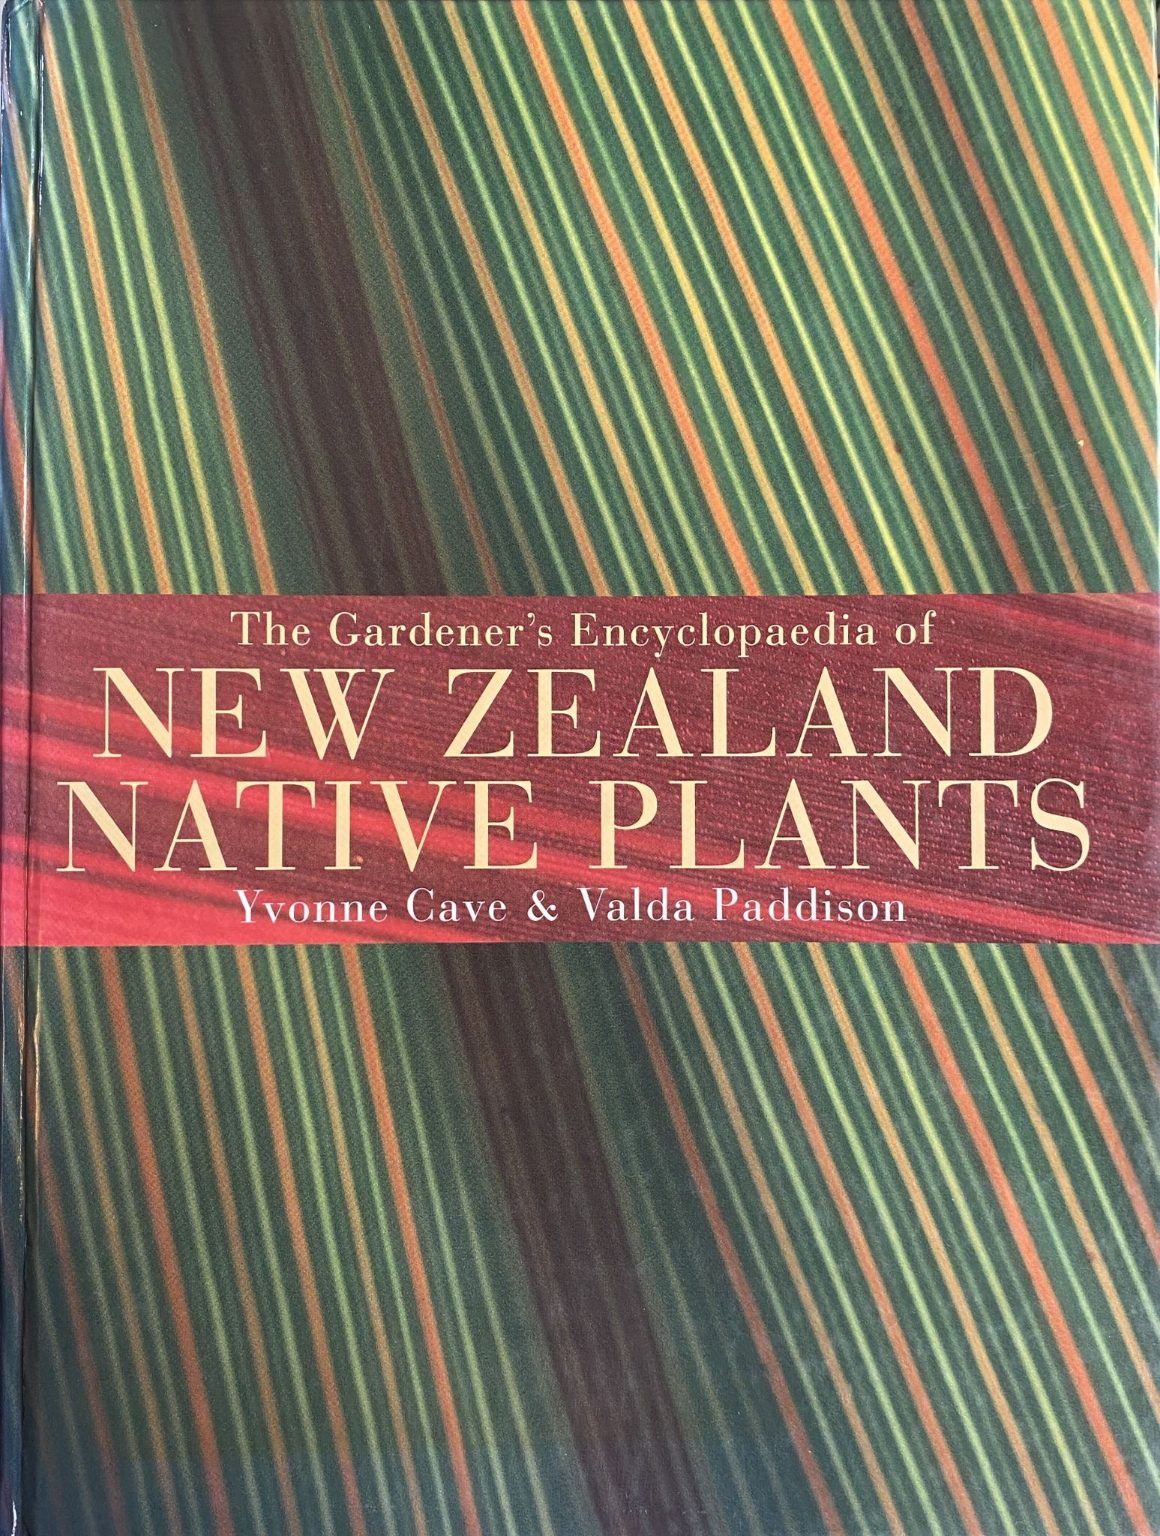 THE GARDNER'S ENCYCLOPAEDIA OF NEW ZEALAND NATIVE PLANTS